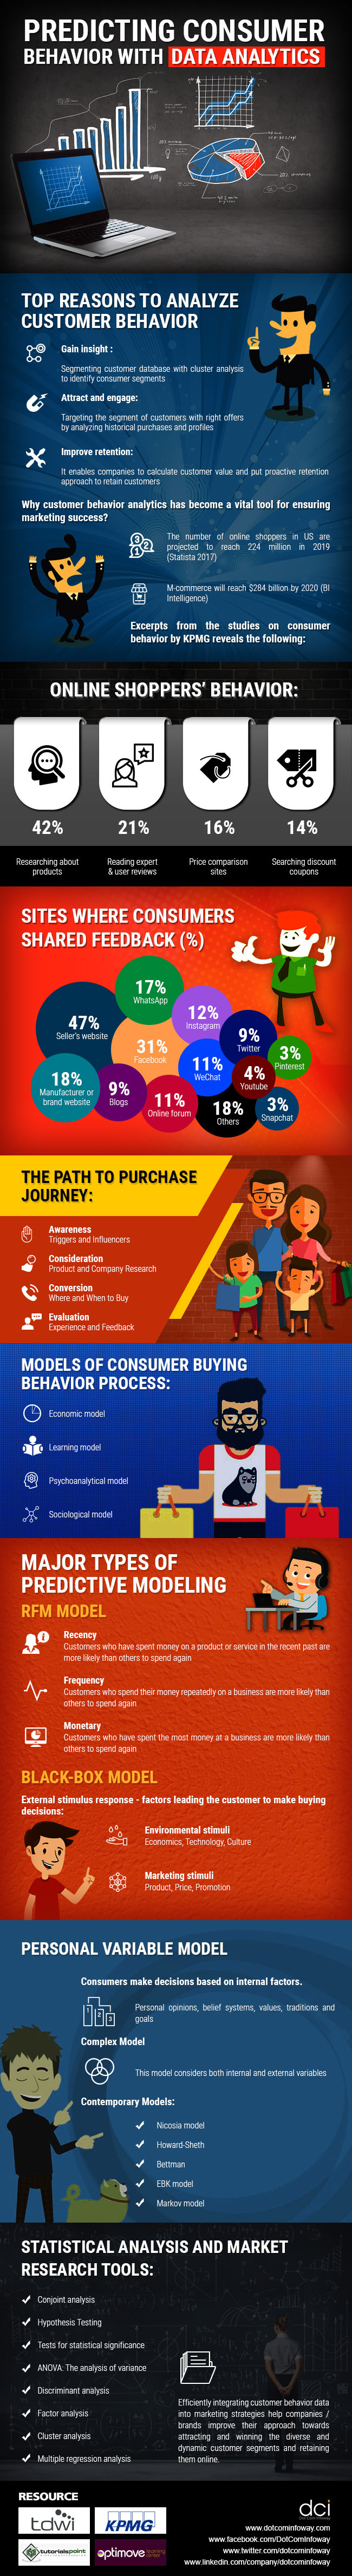 Predicting Consumer Behavior with Data Analytics